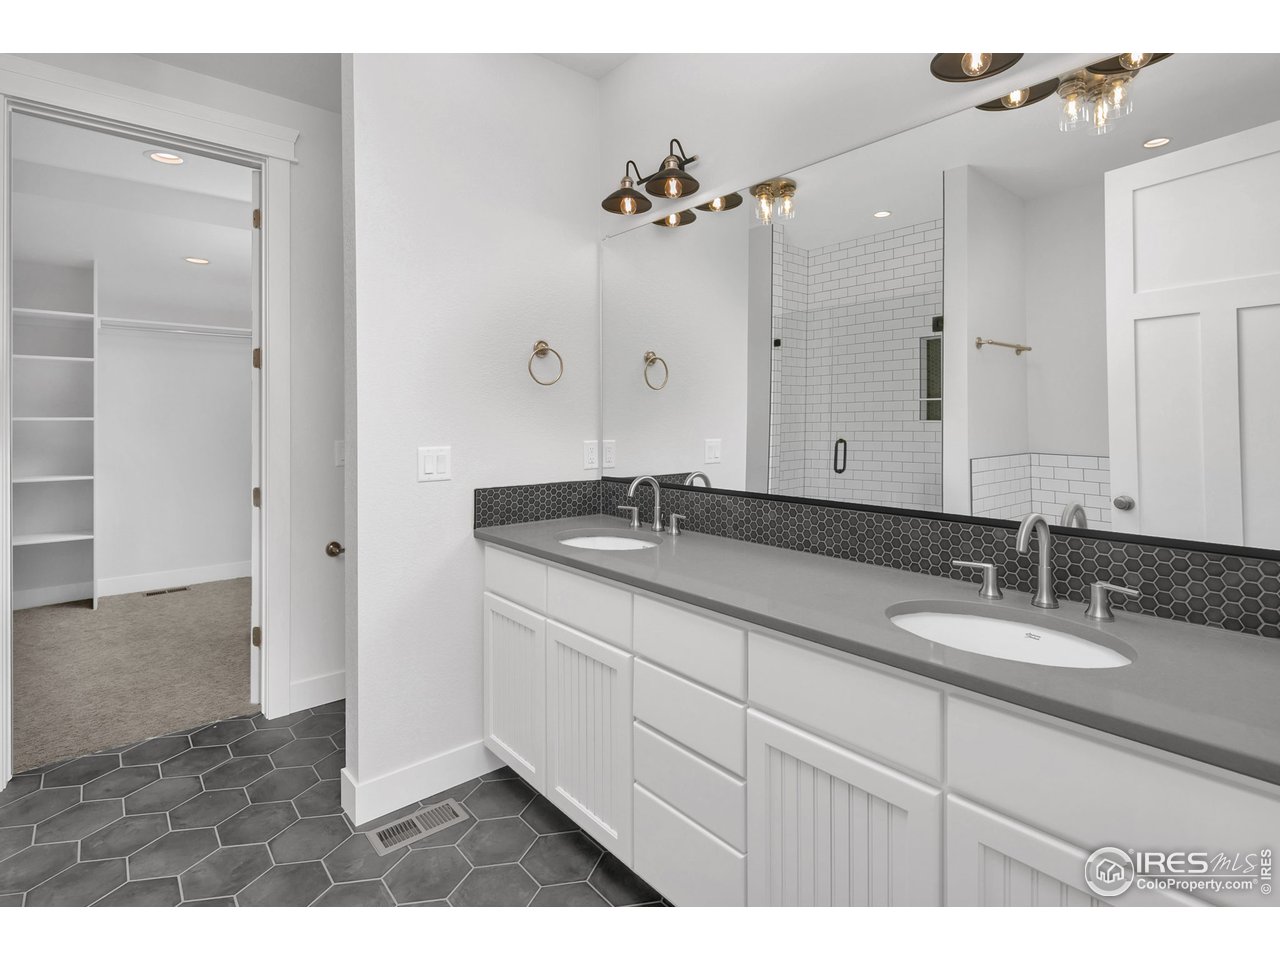 Double vanities make bathroom spaces so convenient